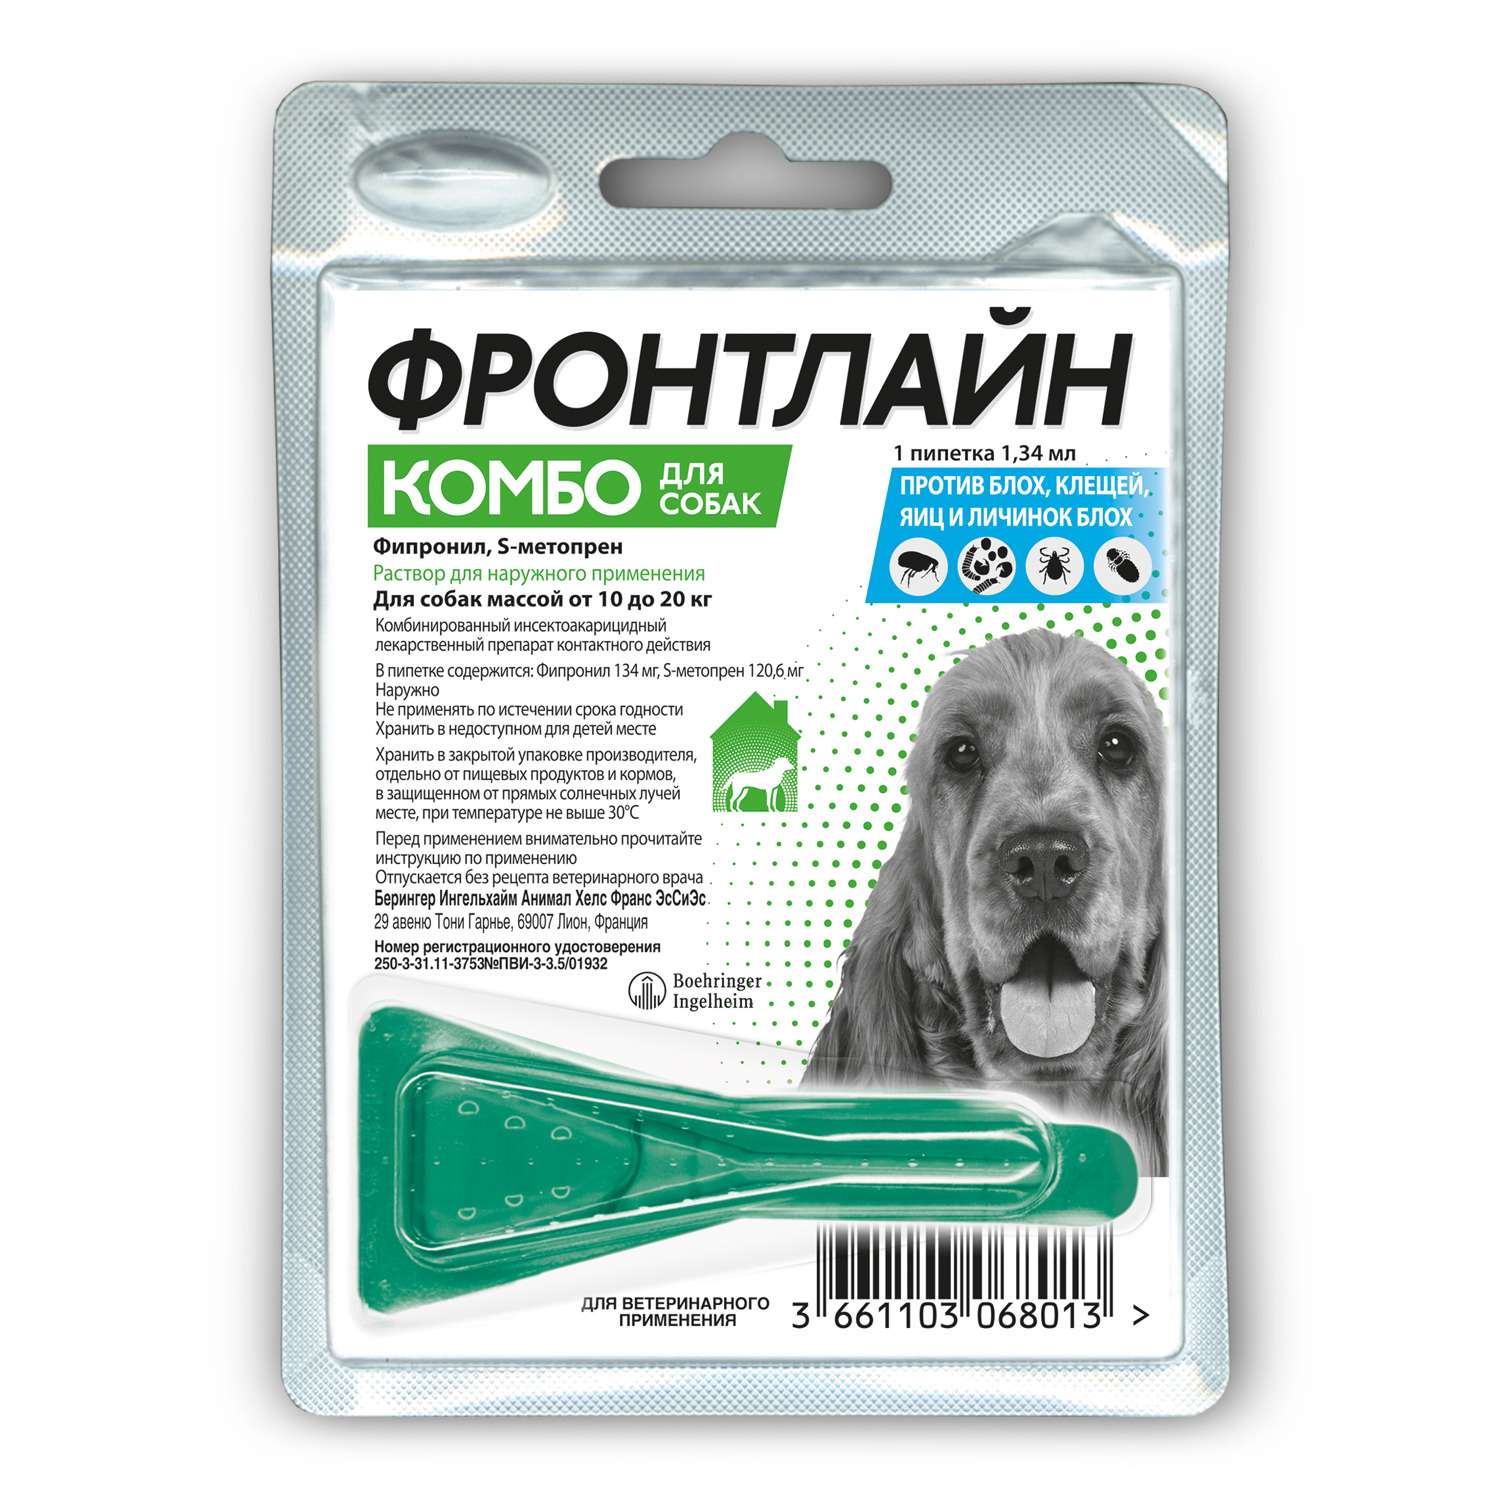 Препарат противопаразитарный для собак Boehringer Ingelheim Фронтлайн Комбо M 1.34г пипетка - фото 1